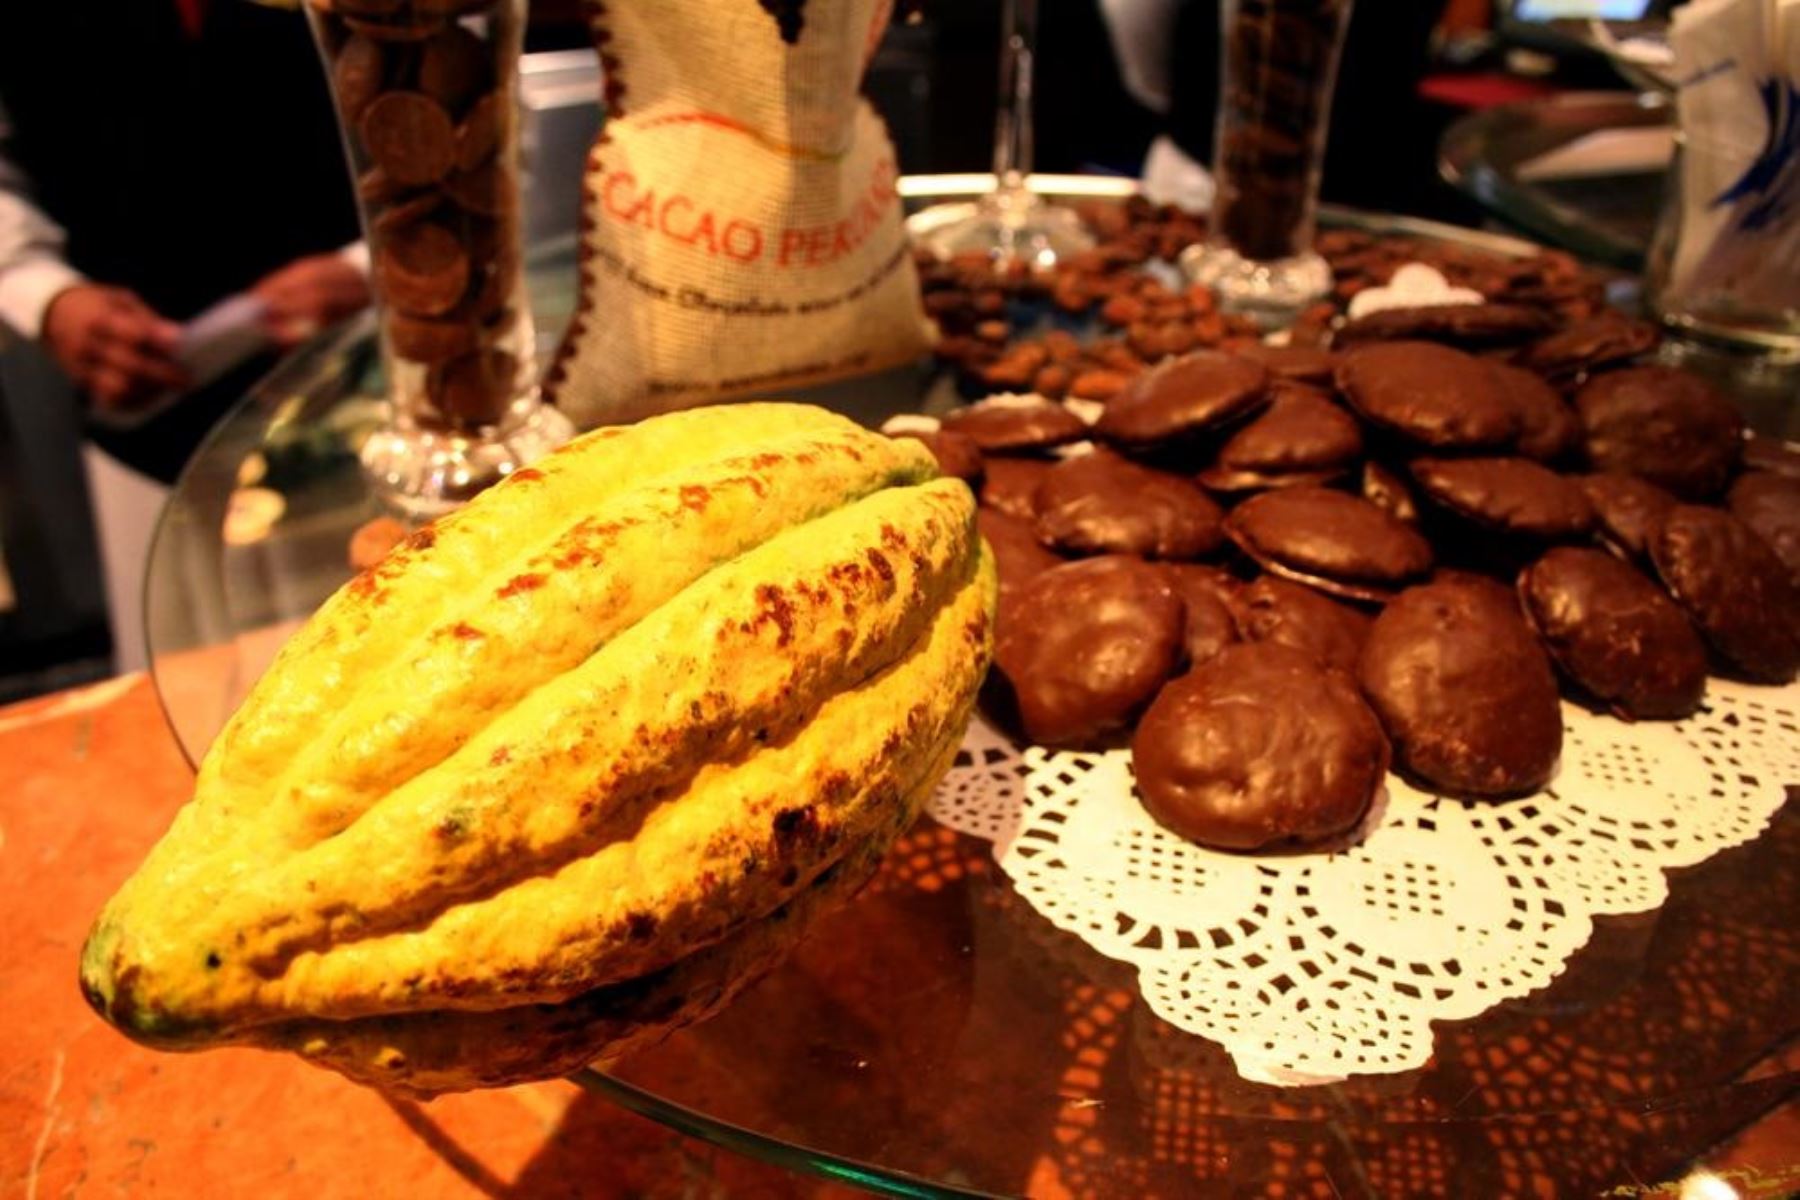 Cacao peruano.